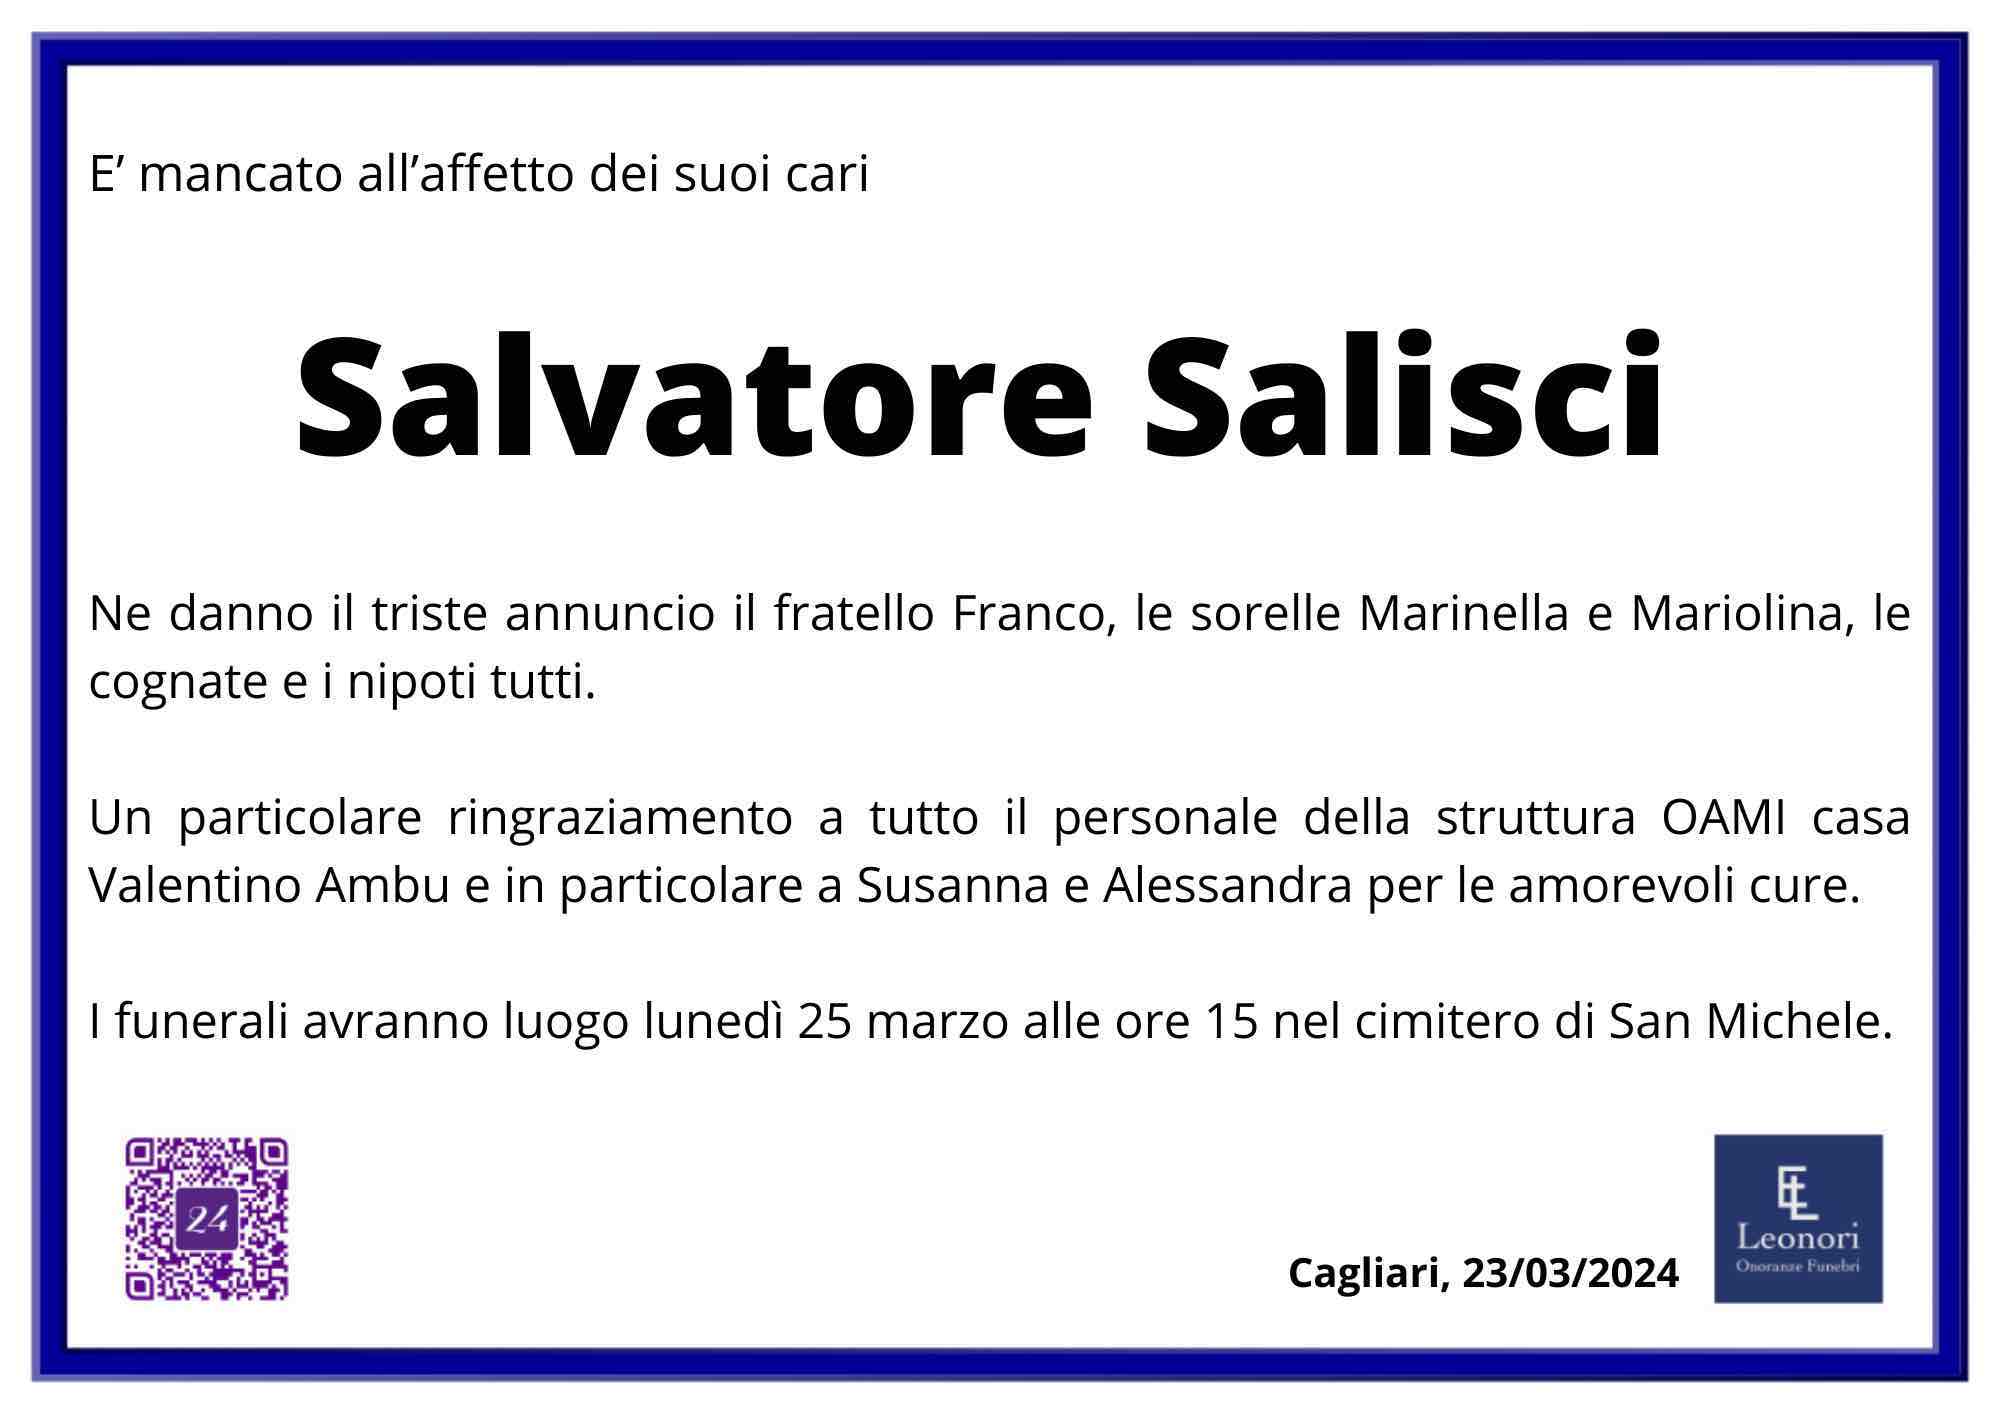 Salvatore Salisci